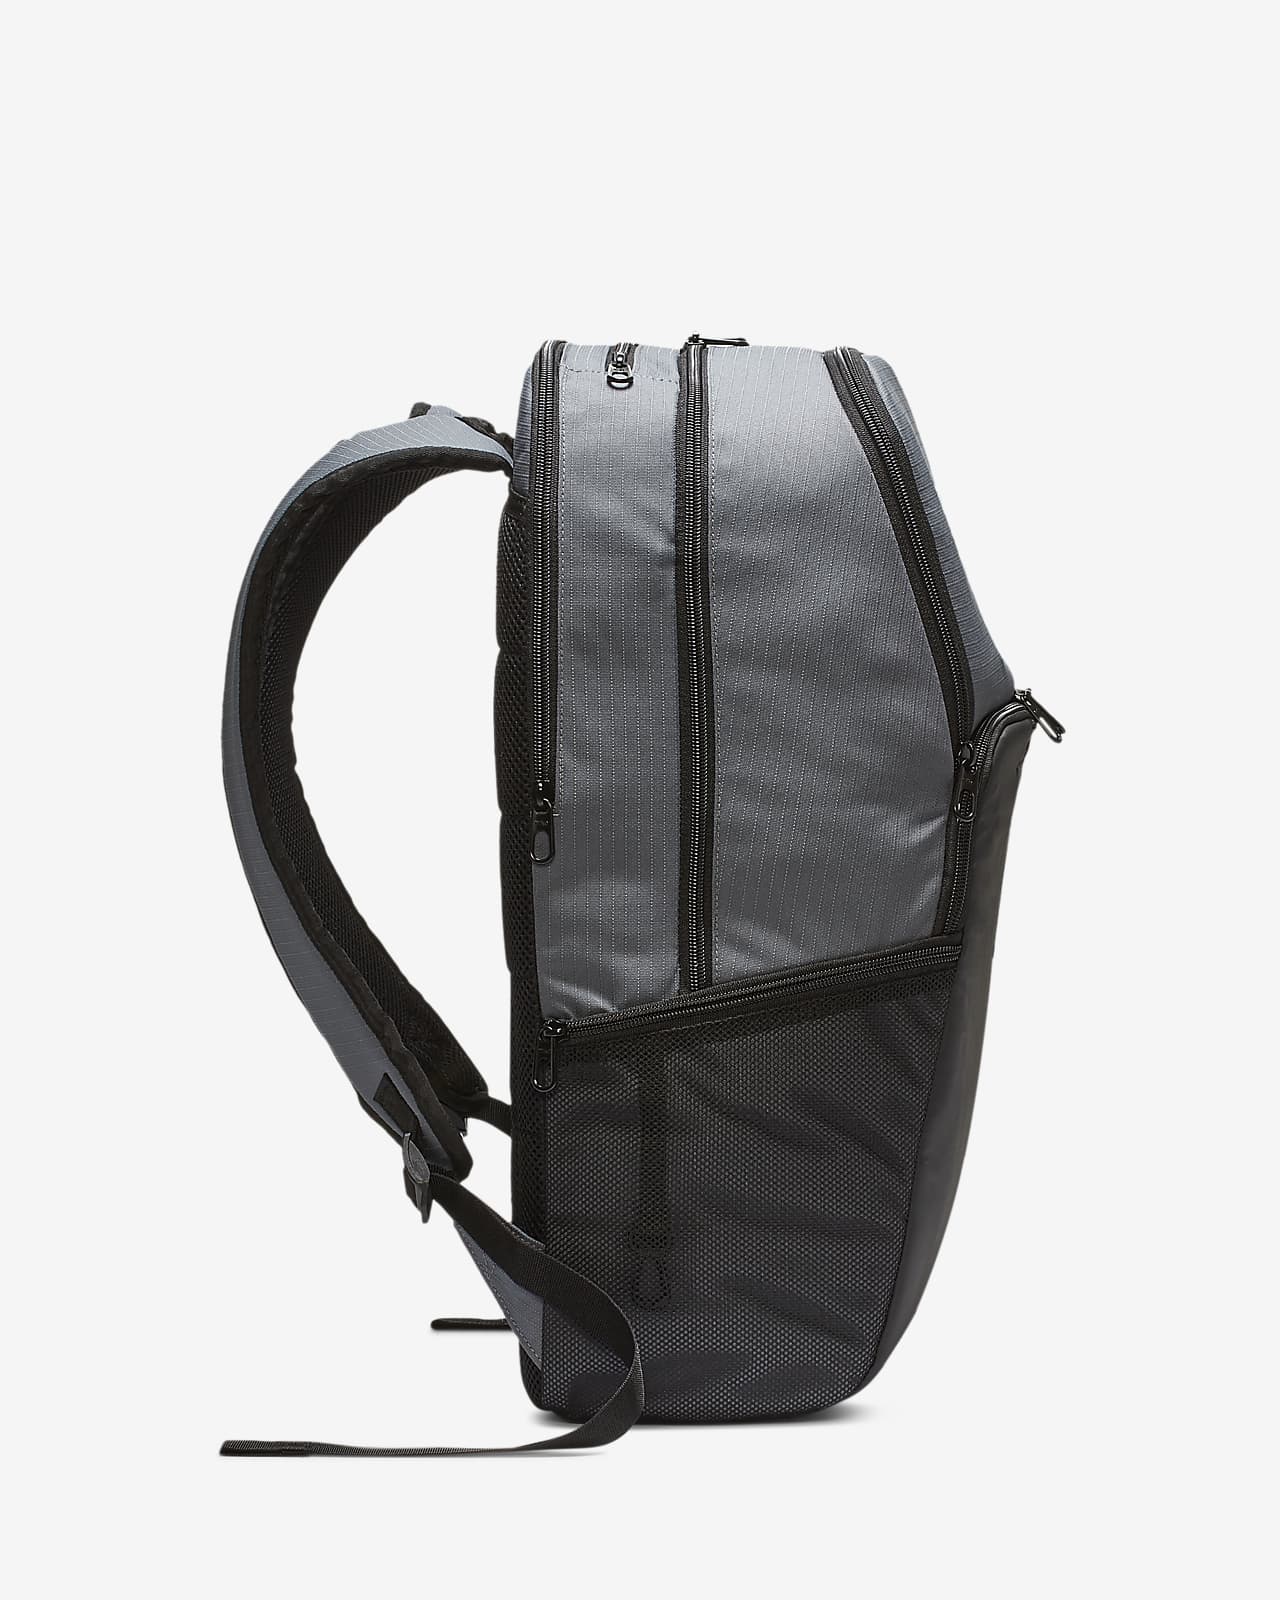 nike brasilia xl winterized backpack